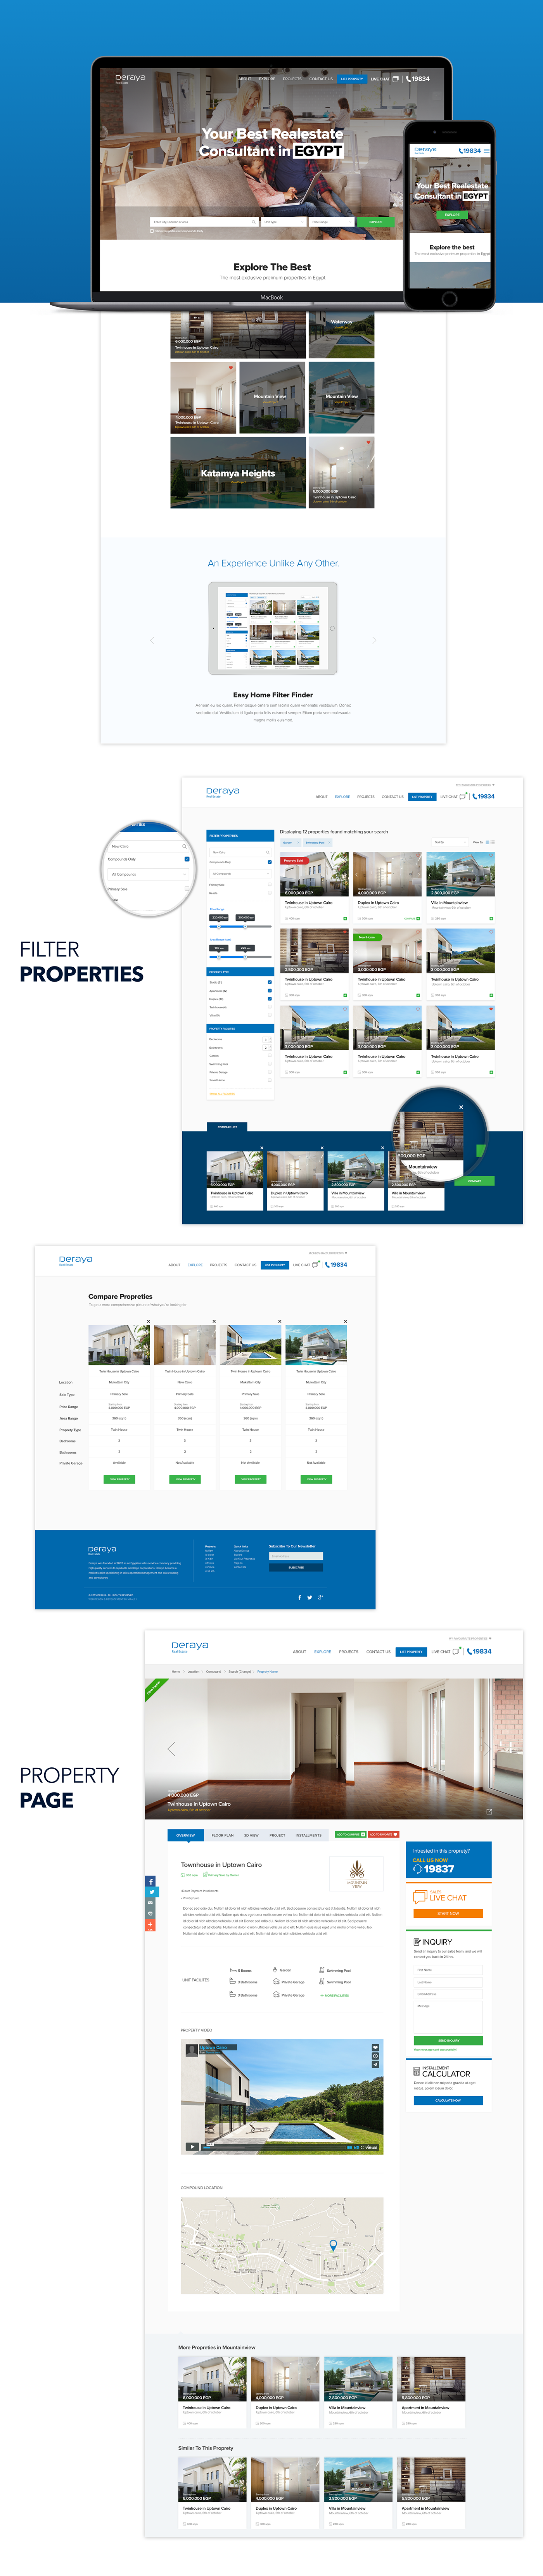 realestate property finder filter search list compare ui design Website Homes